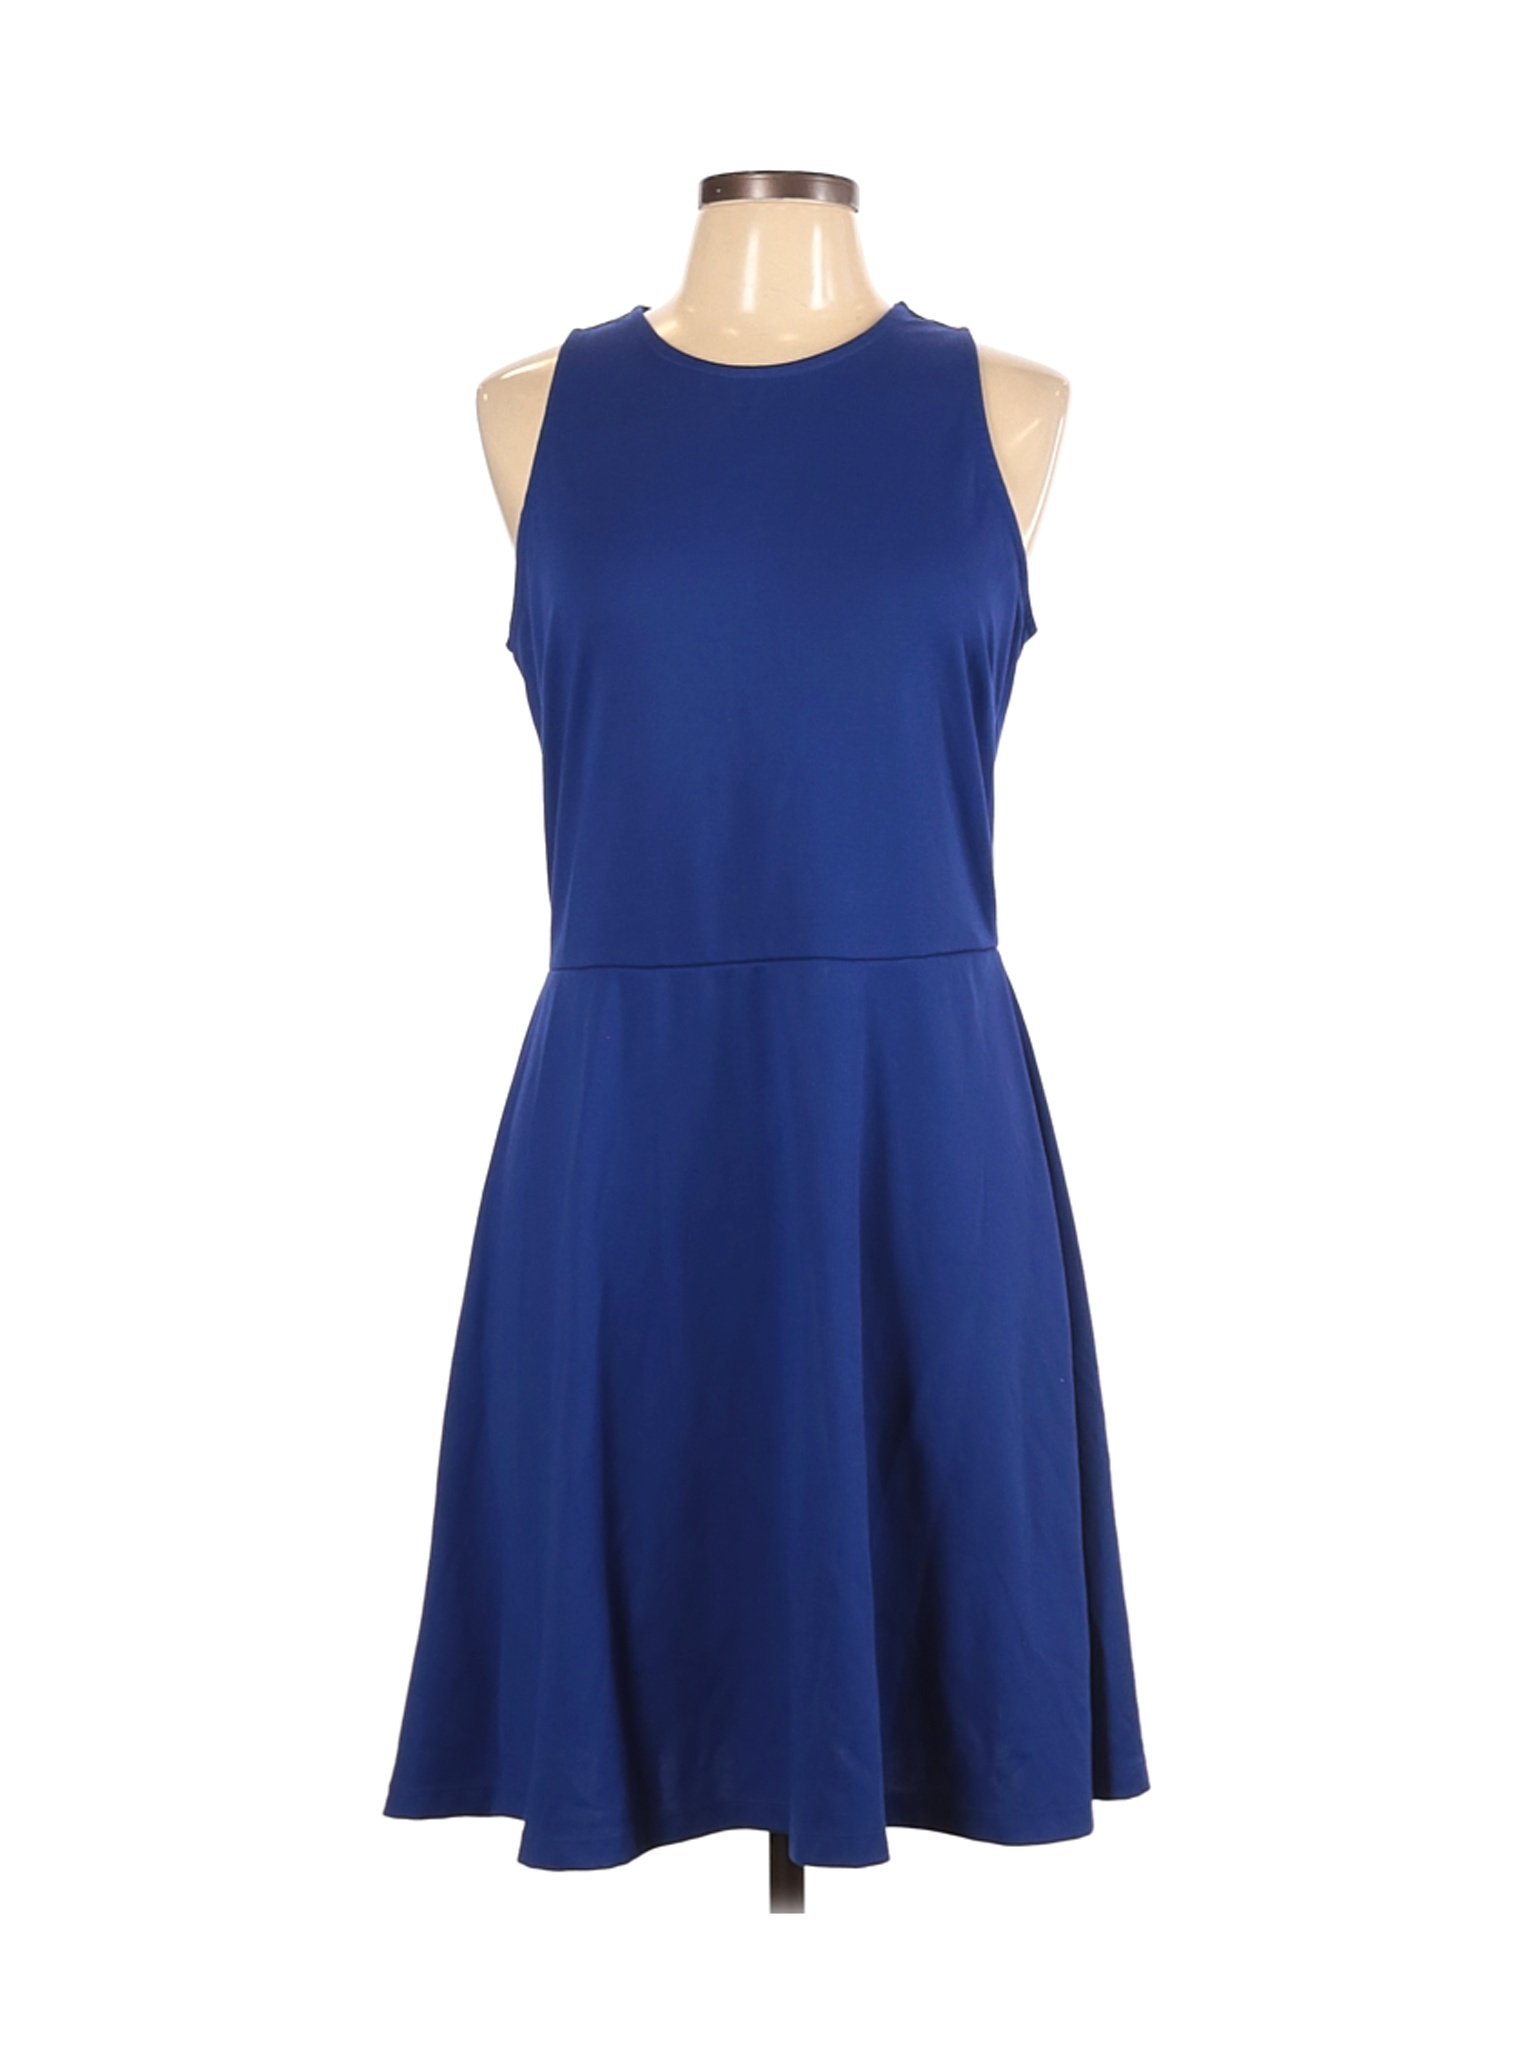 H&M Women Blue Casual Dress L | eBay